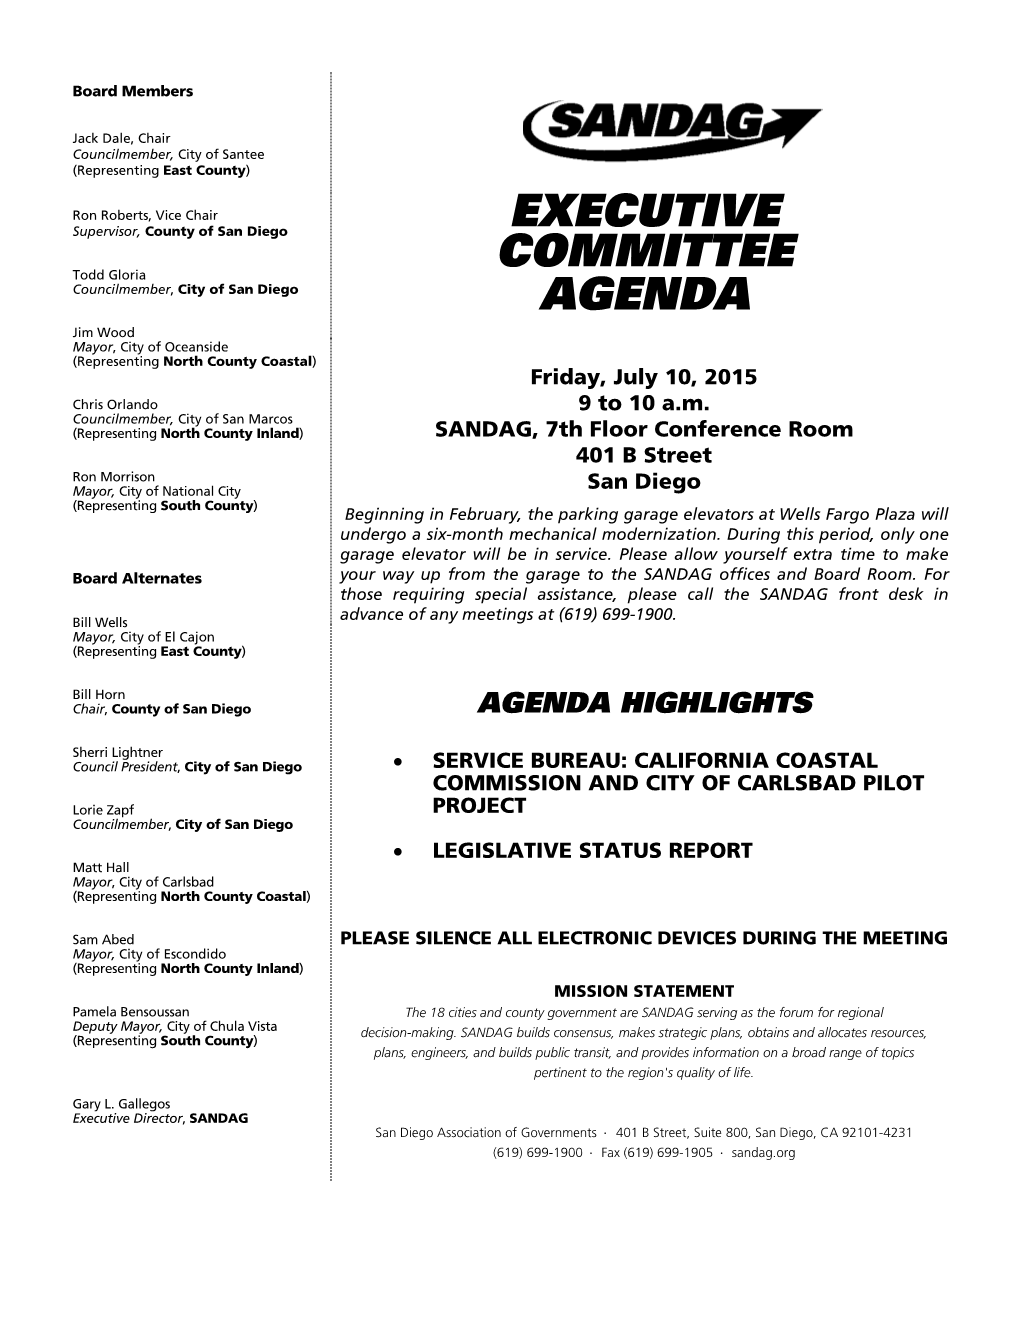 Agenda and Meeting Notice